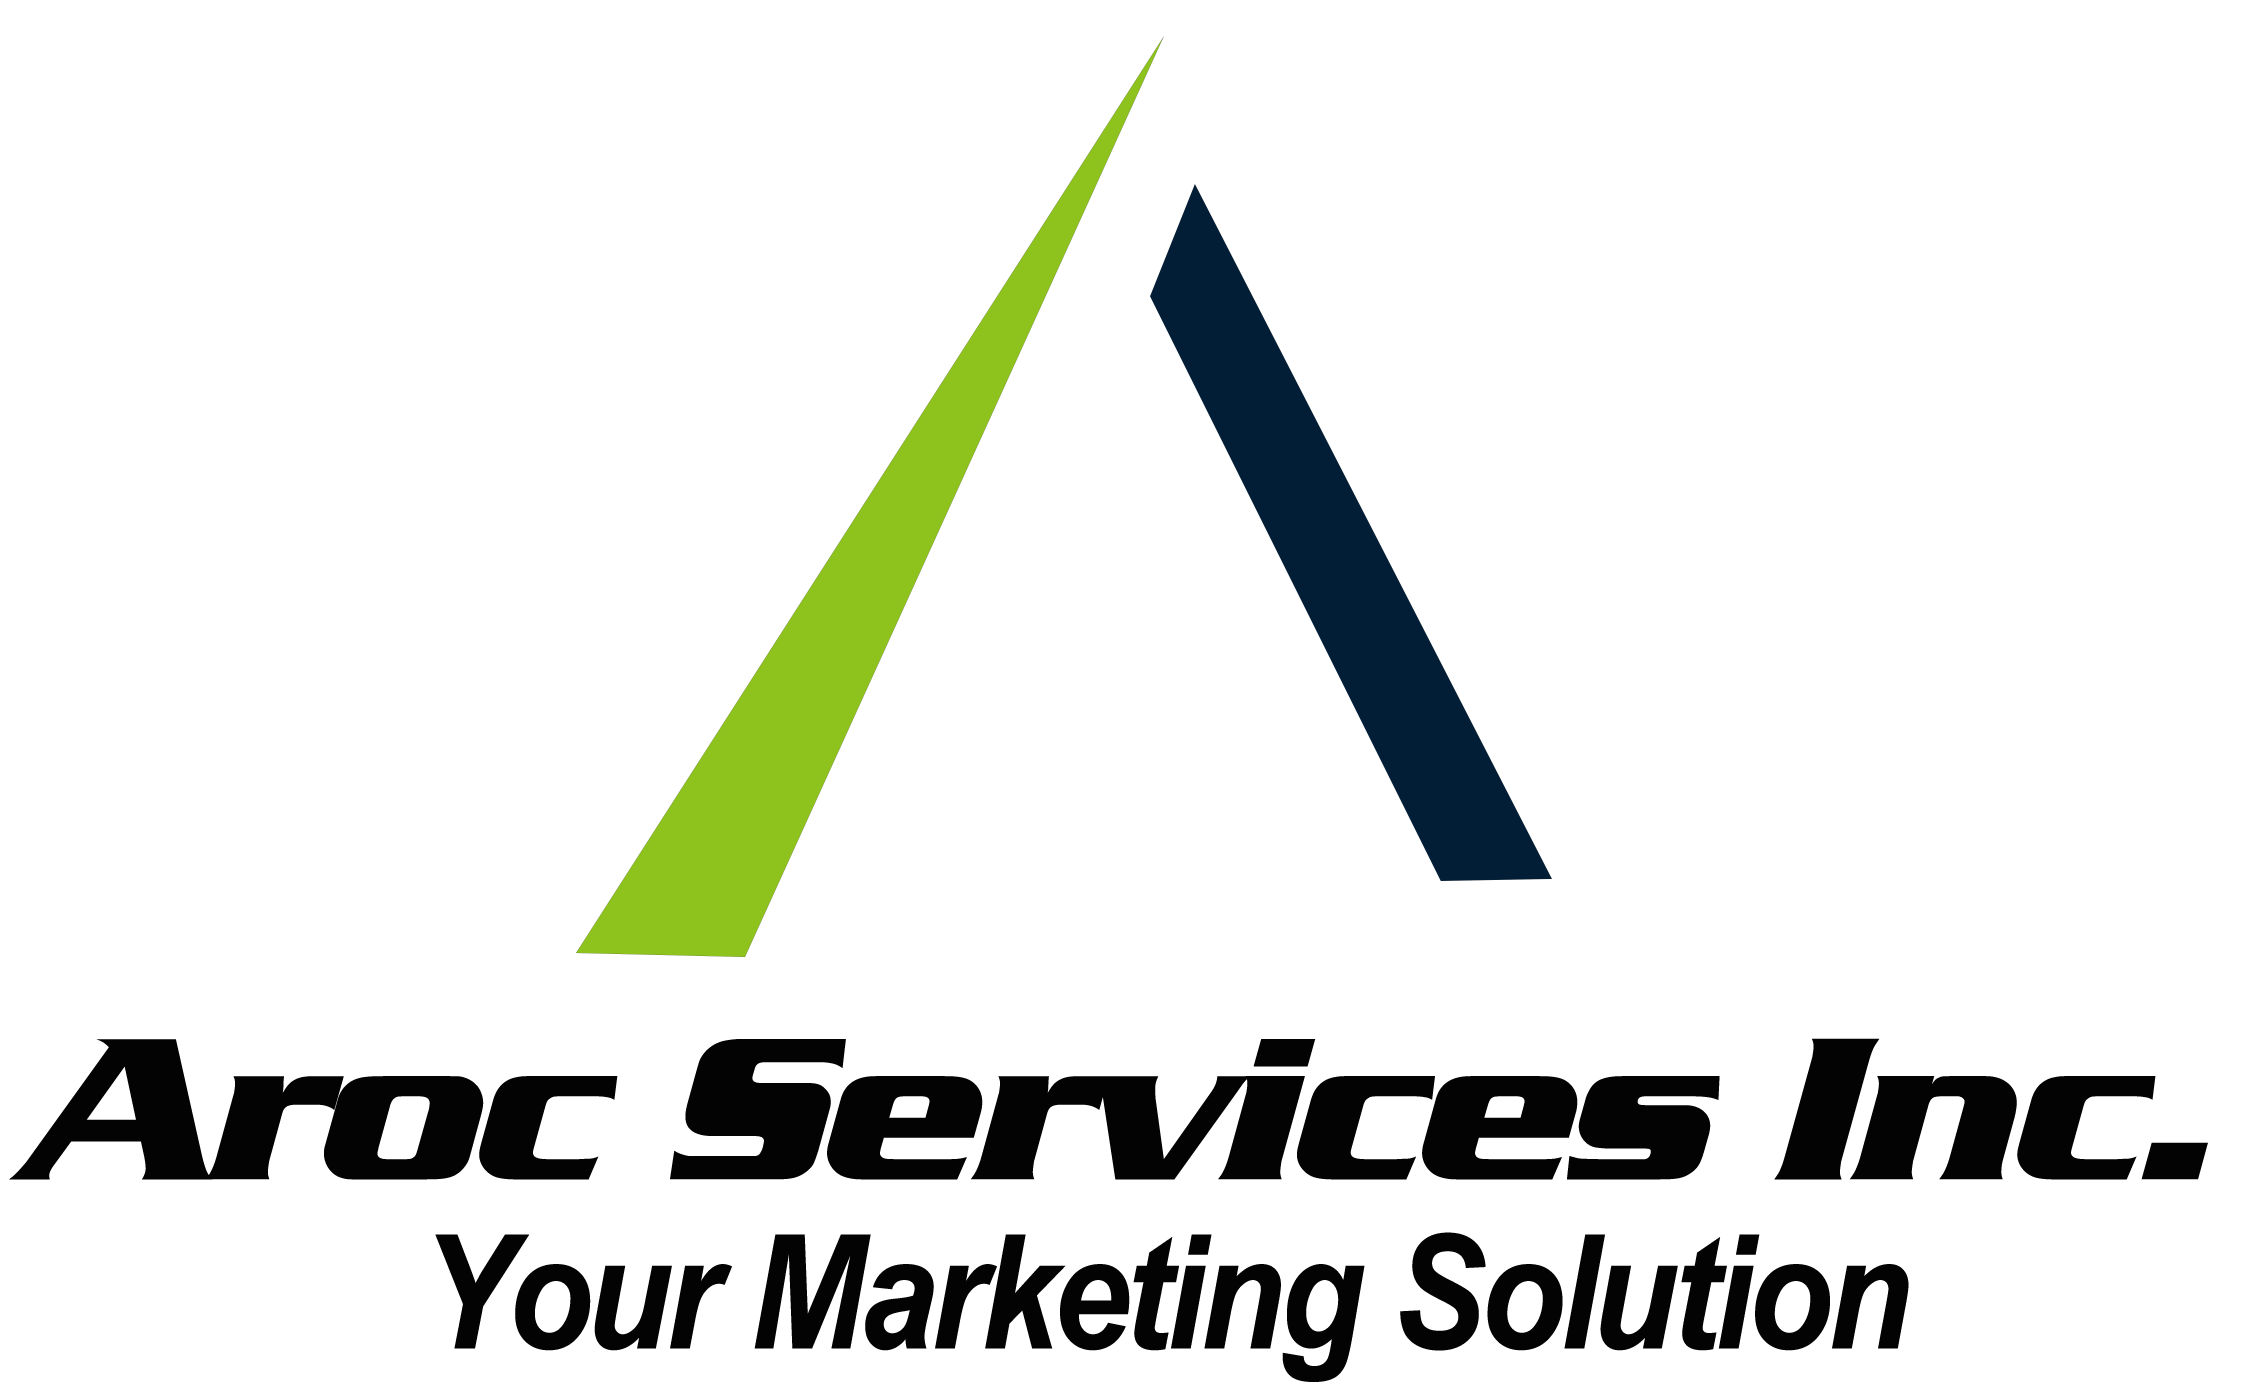 Aroc Services Inc.